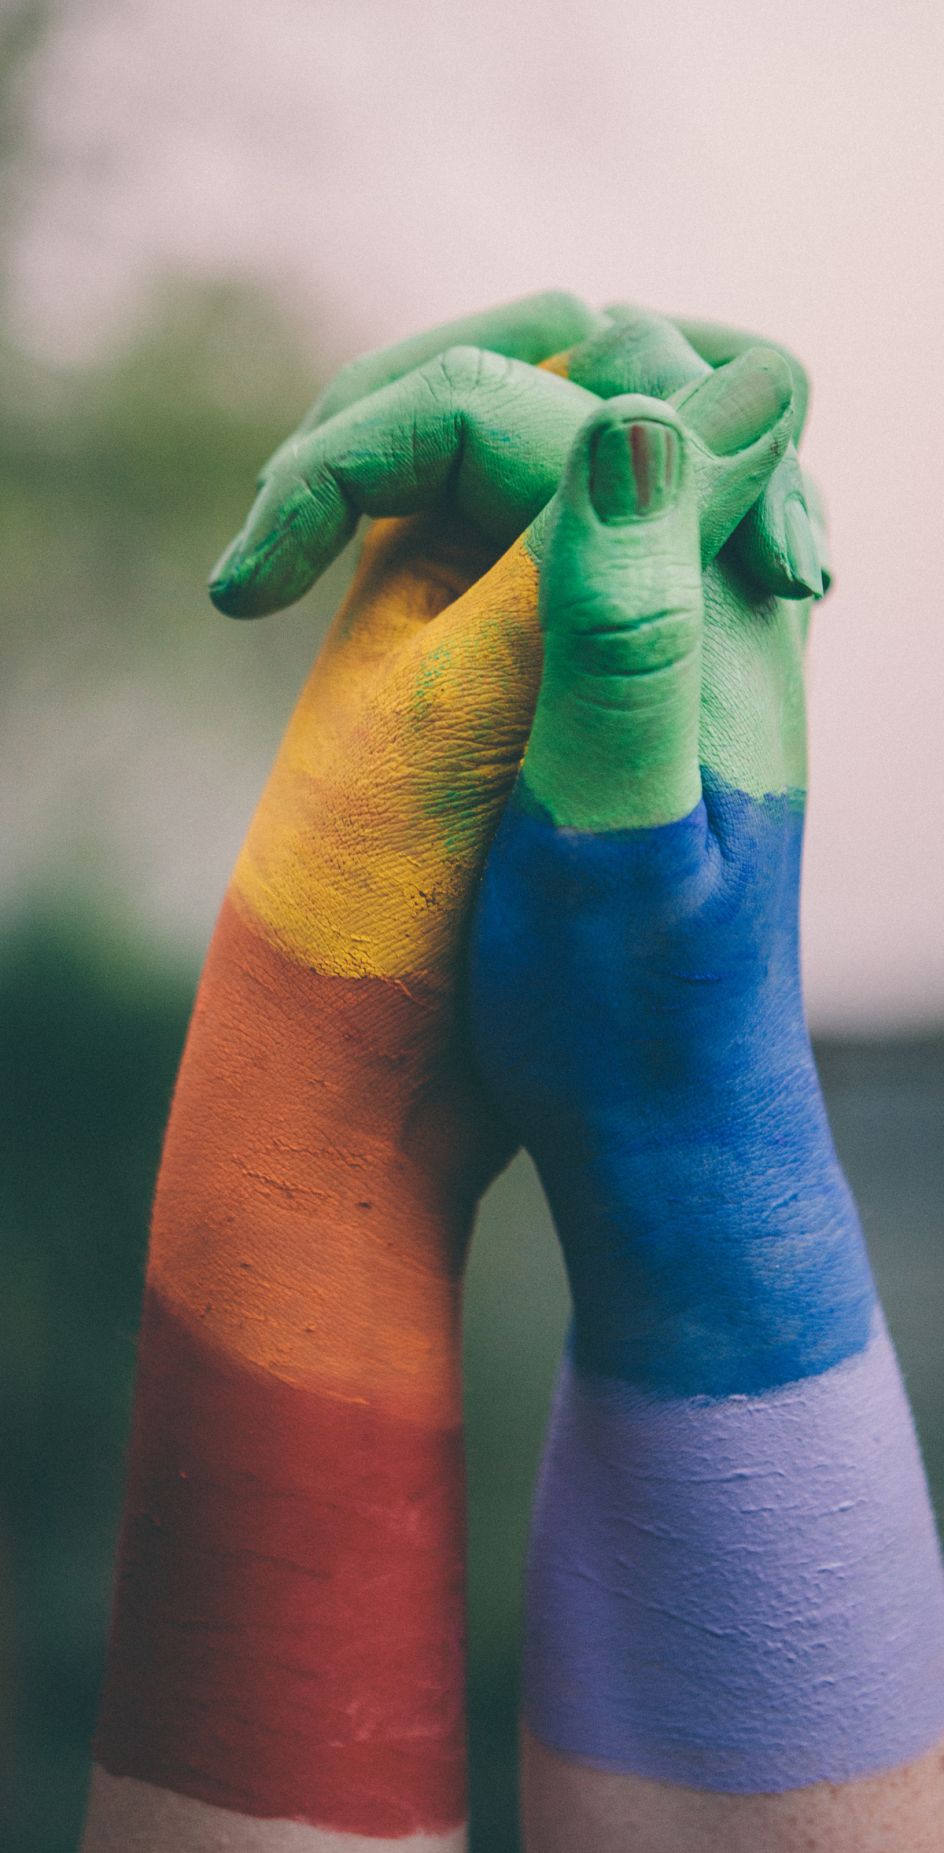 ID: [179179711](https://stock.adobe.com/images/hands-painted-in-gay-pride-rainbow/179179711?prev_url=detail)